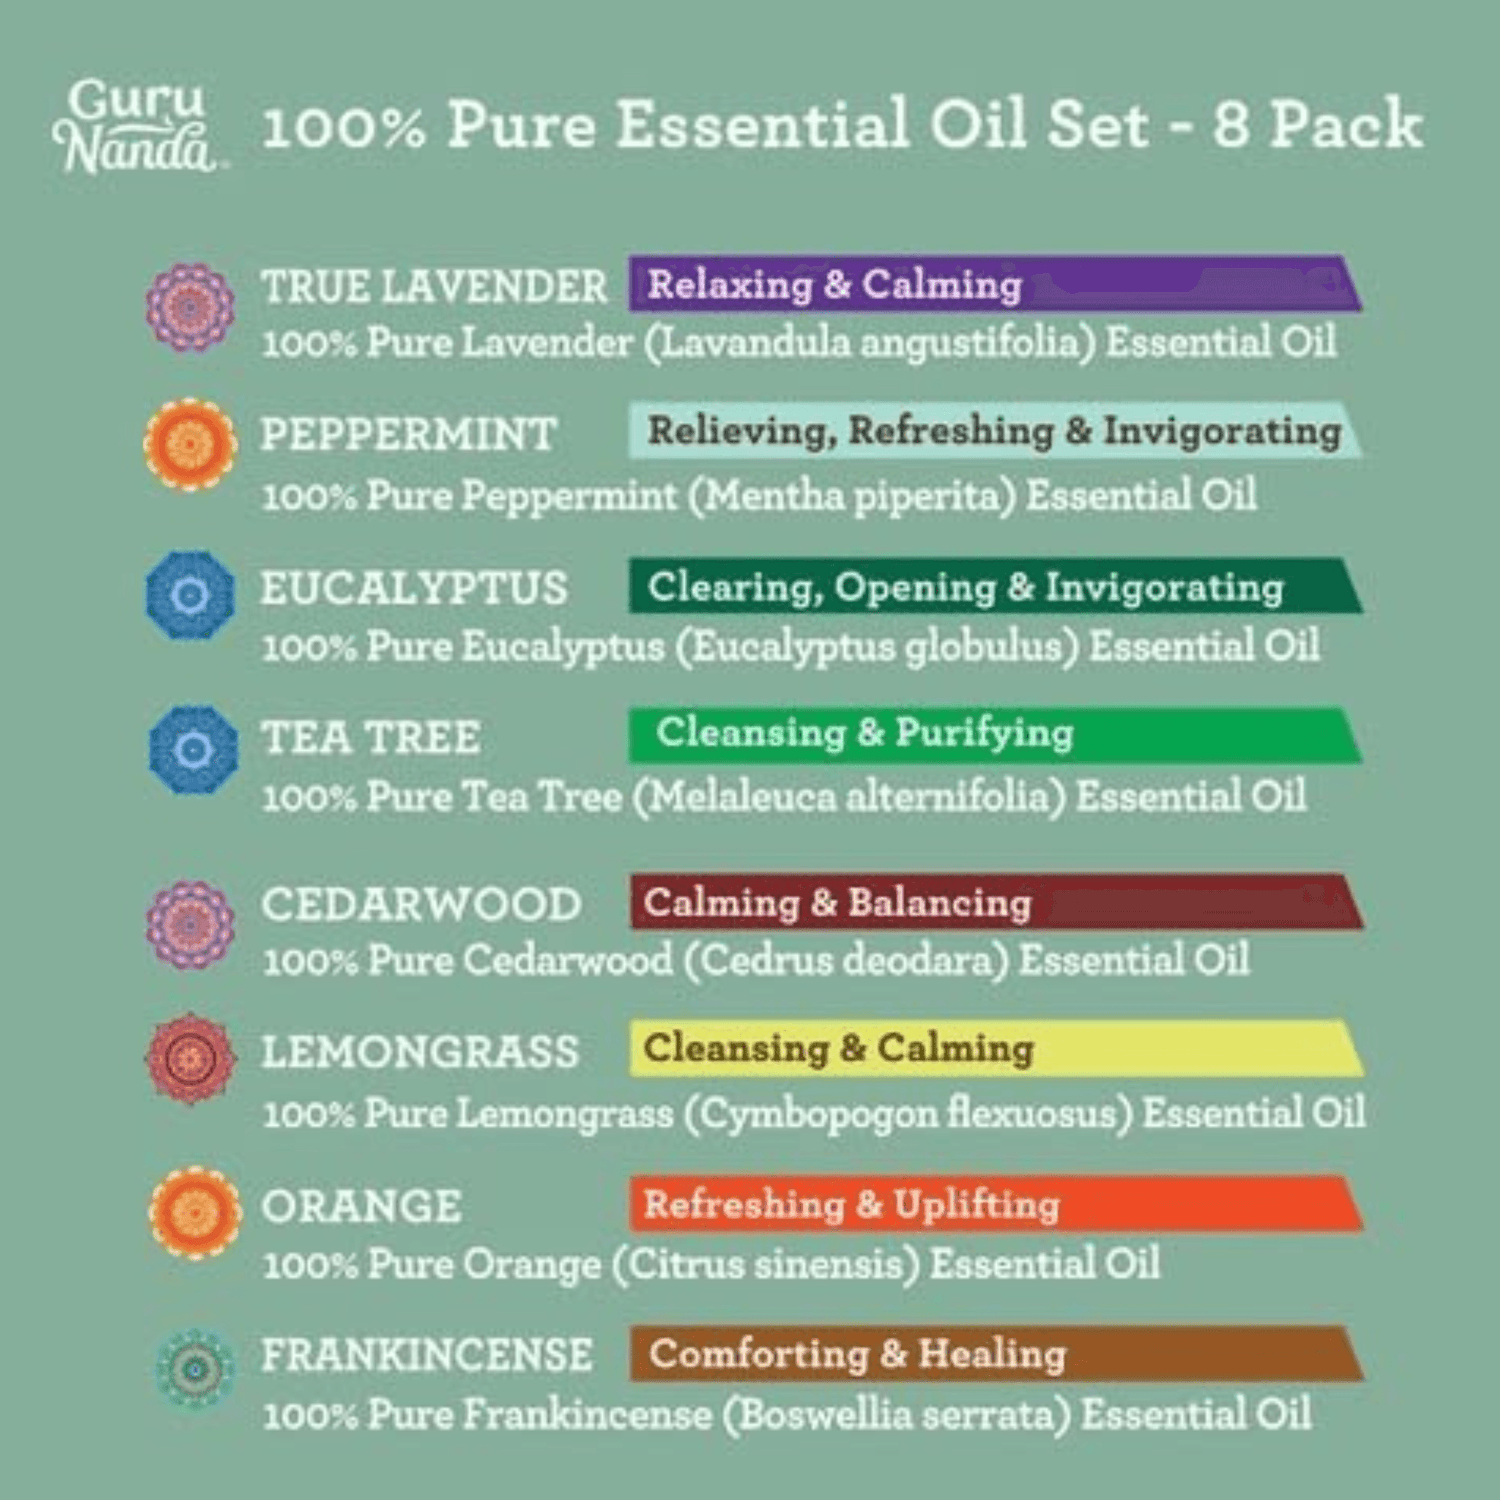 8 Essential Oils Single Notes Set - GuruNanda